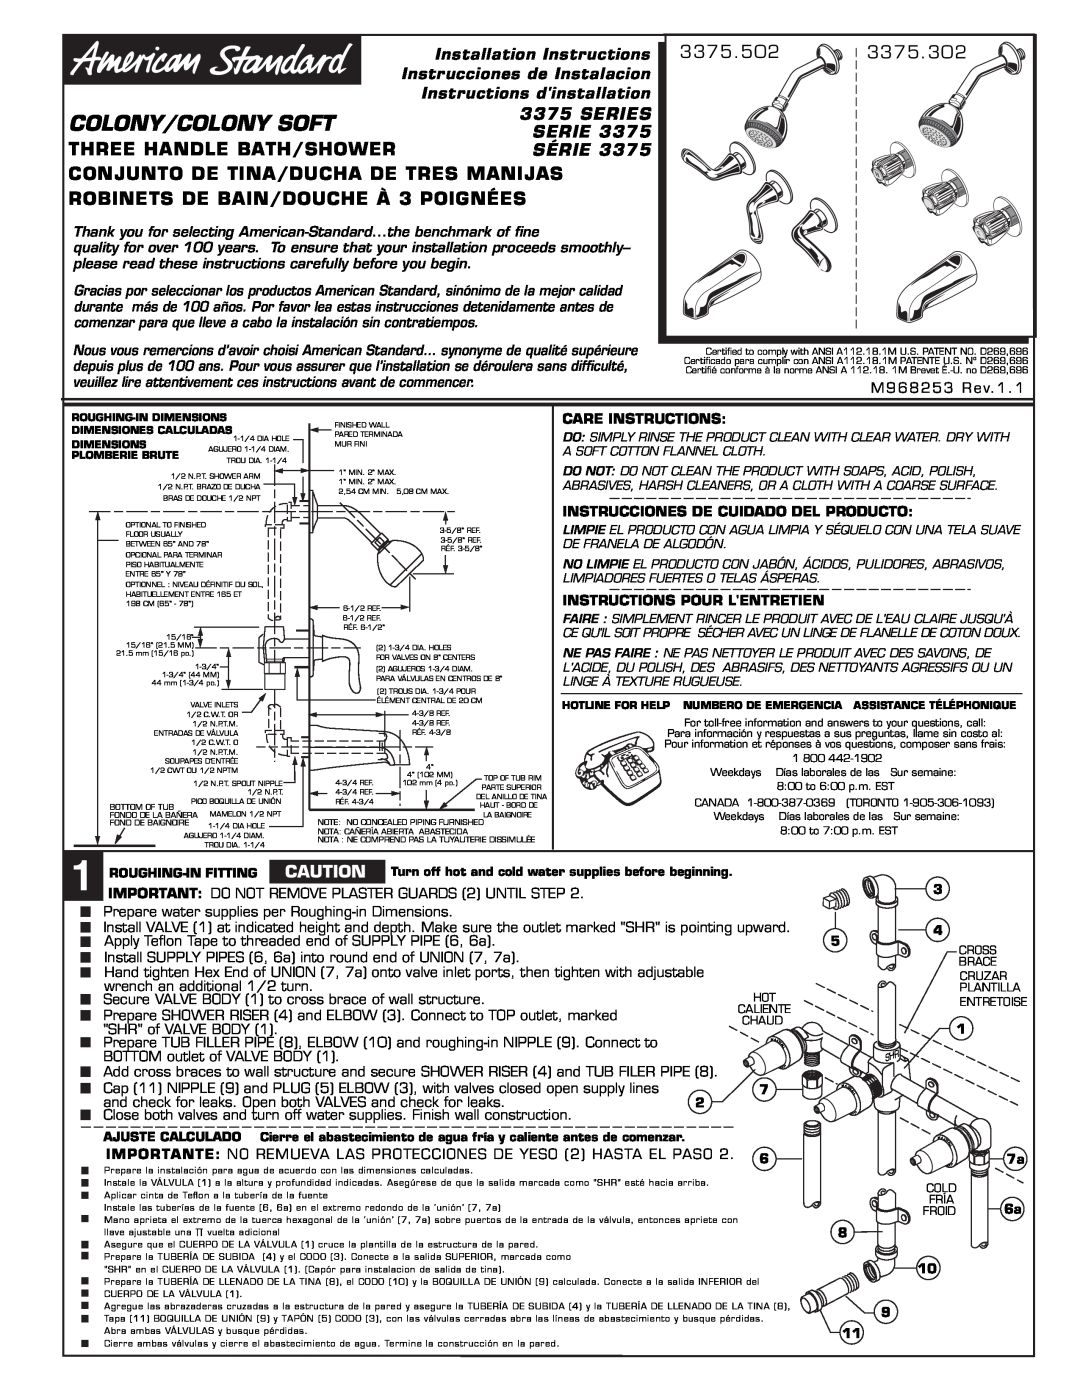 American Standard 3375 dimensions Care Instructions, Instrucciones De Cuidado Del Producto, Instructions Pour Lentretien 